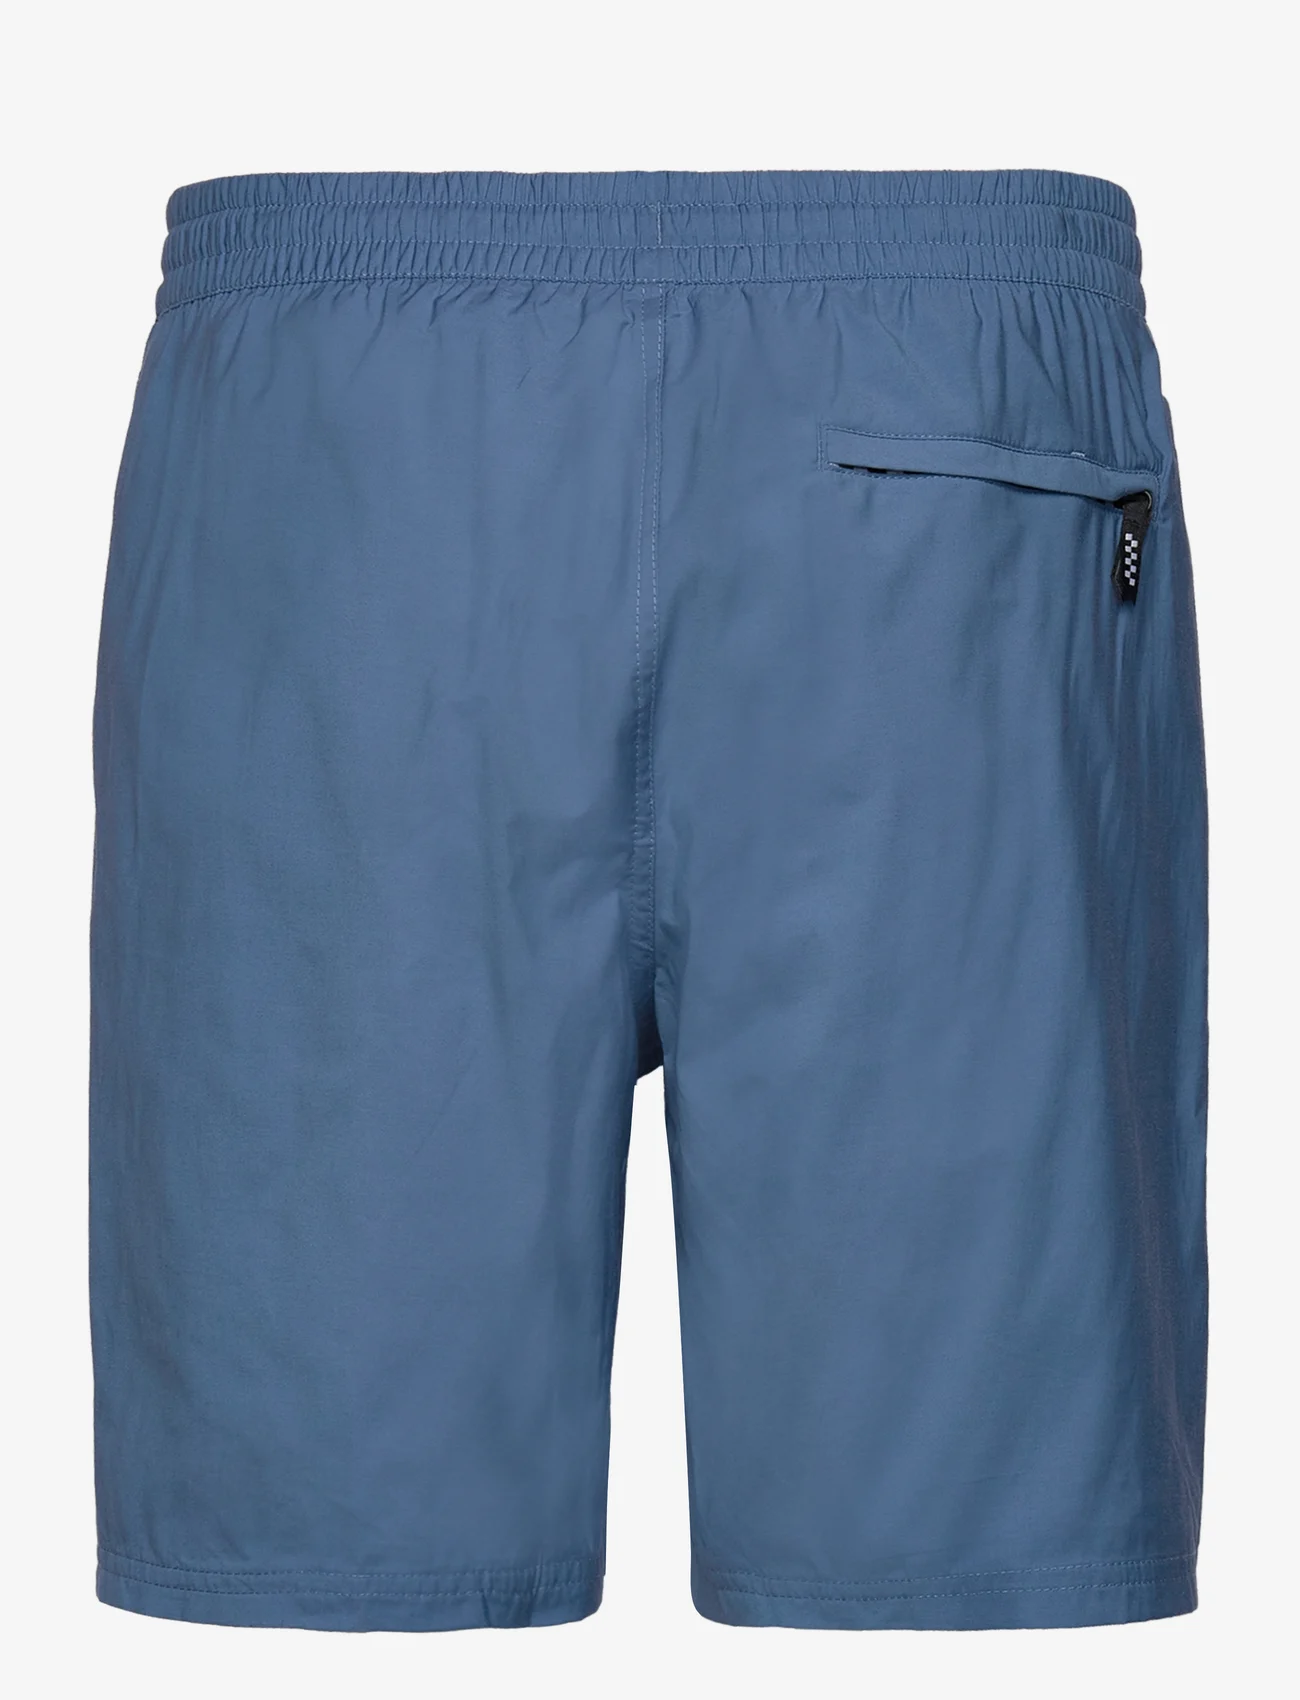 VANS - PRIMARY SOLID ELASTIC BOARDSHORT - sports shorts - copen blue - 1